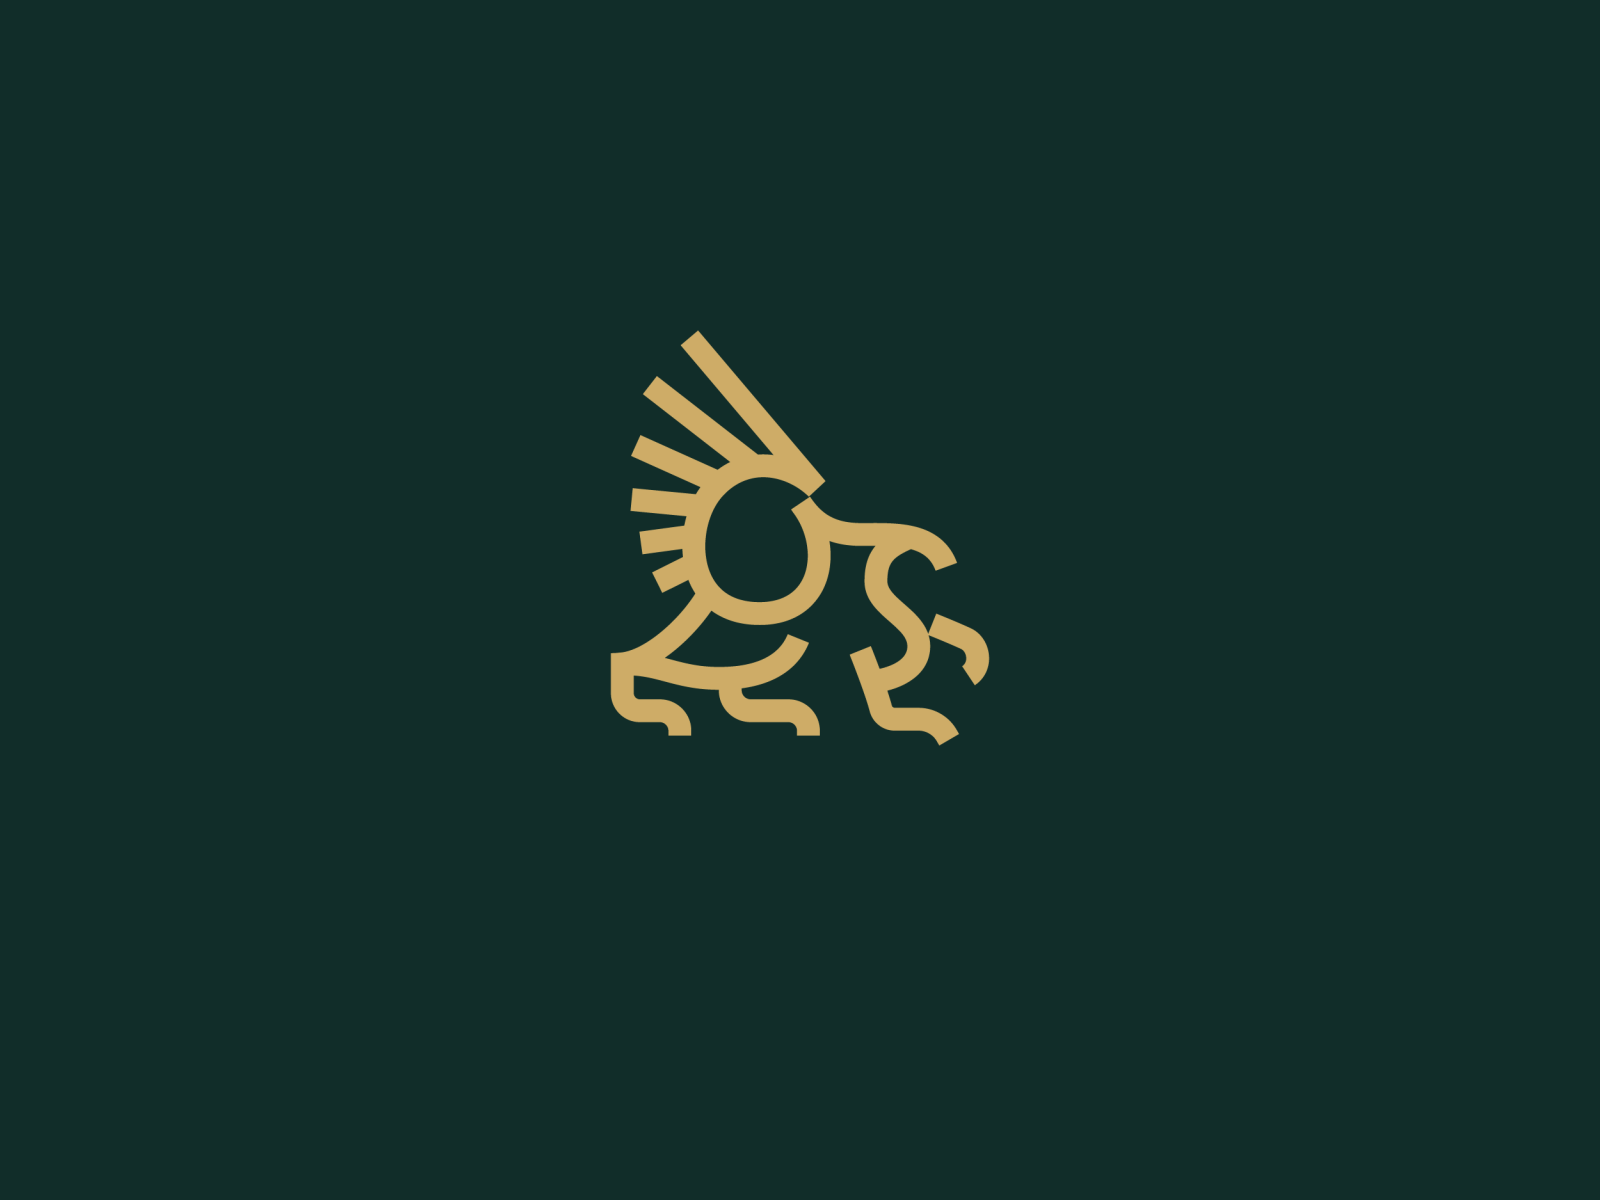 Griffin Logo by Creatoro Design on Dribbble